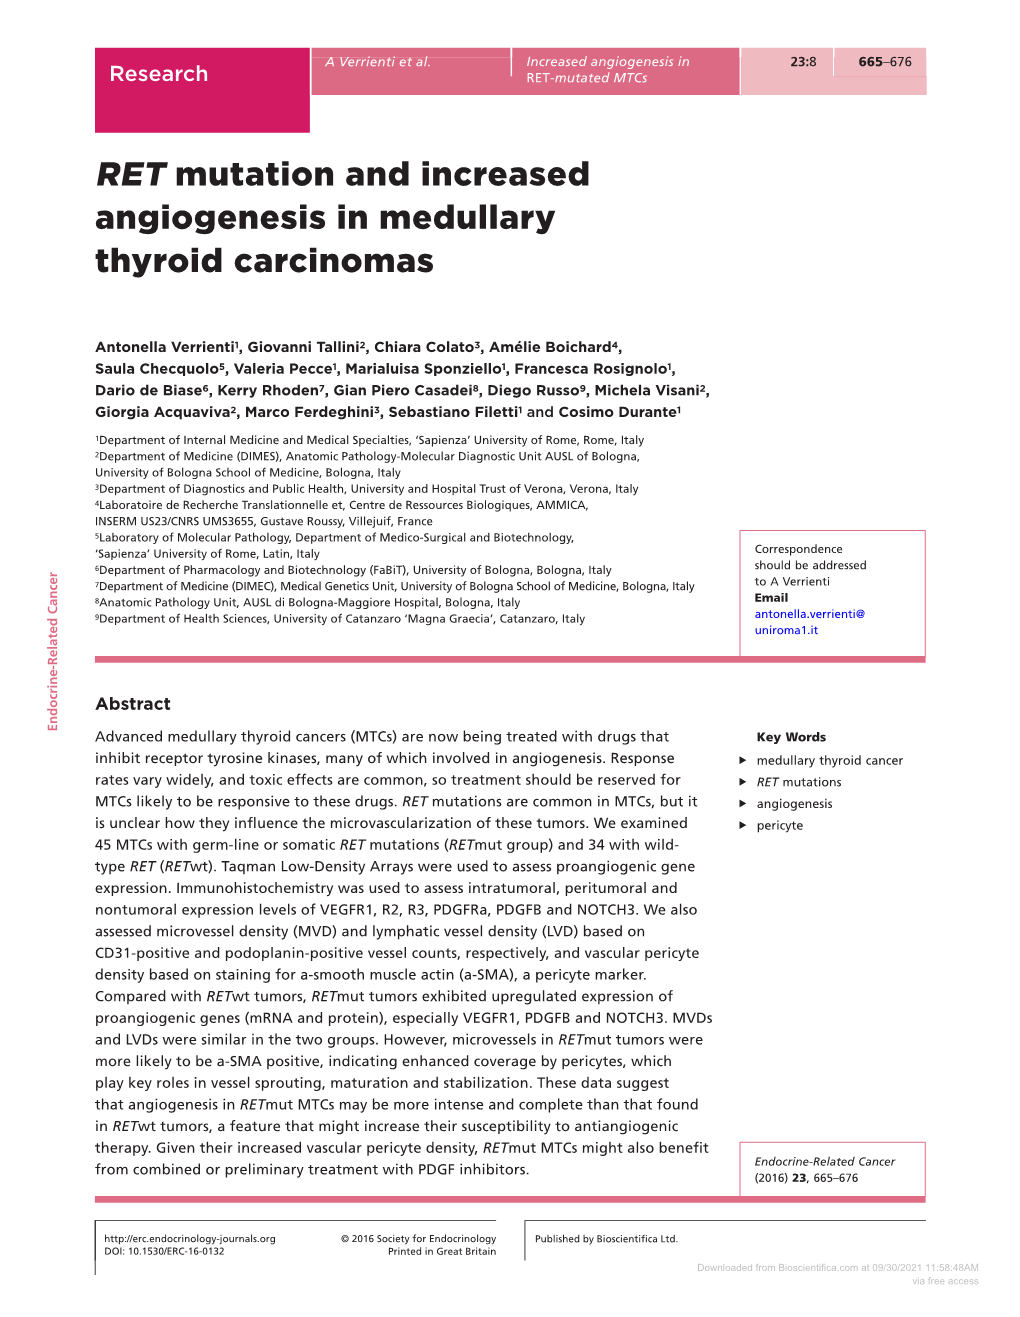 RET Mutation and Increased Angiogenesis in Medullary Thyroid Carcinomas